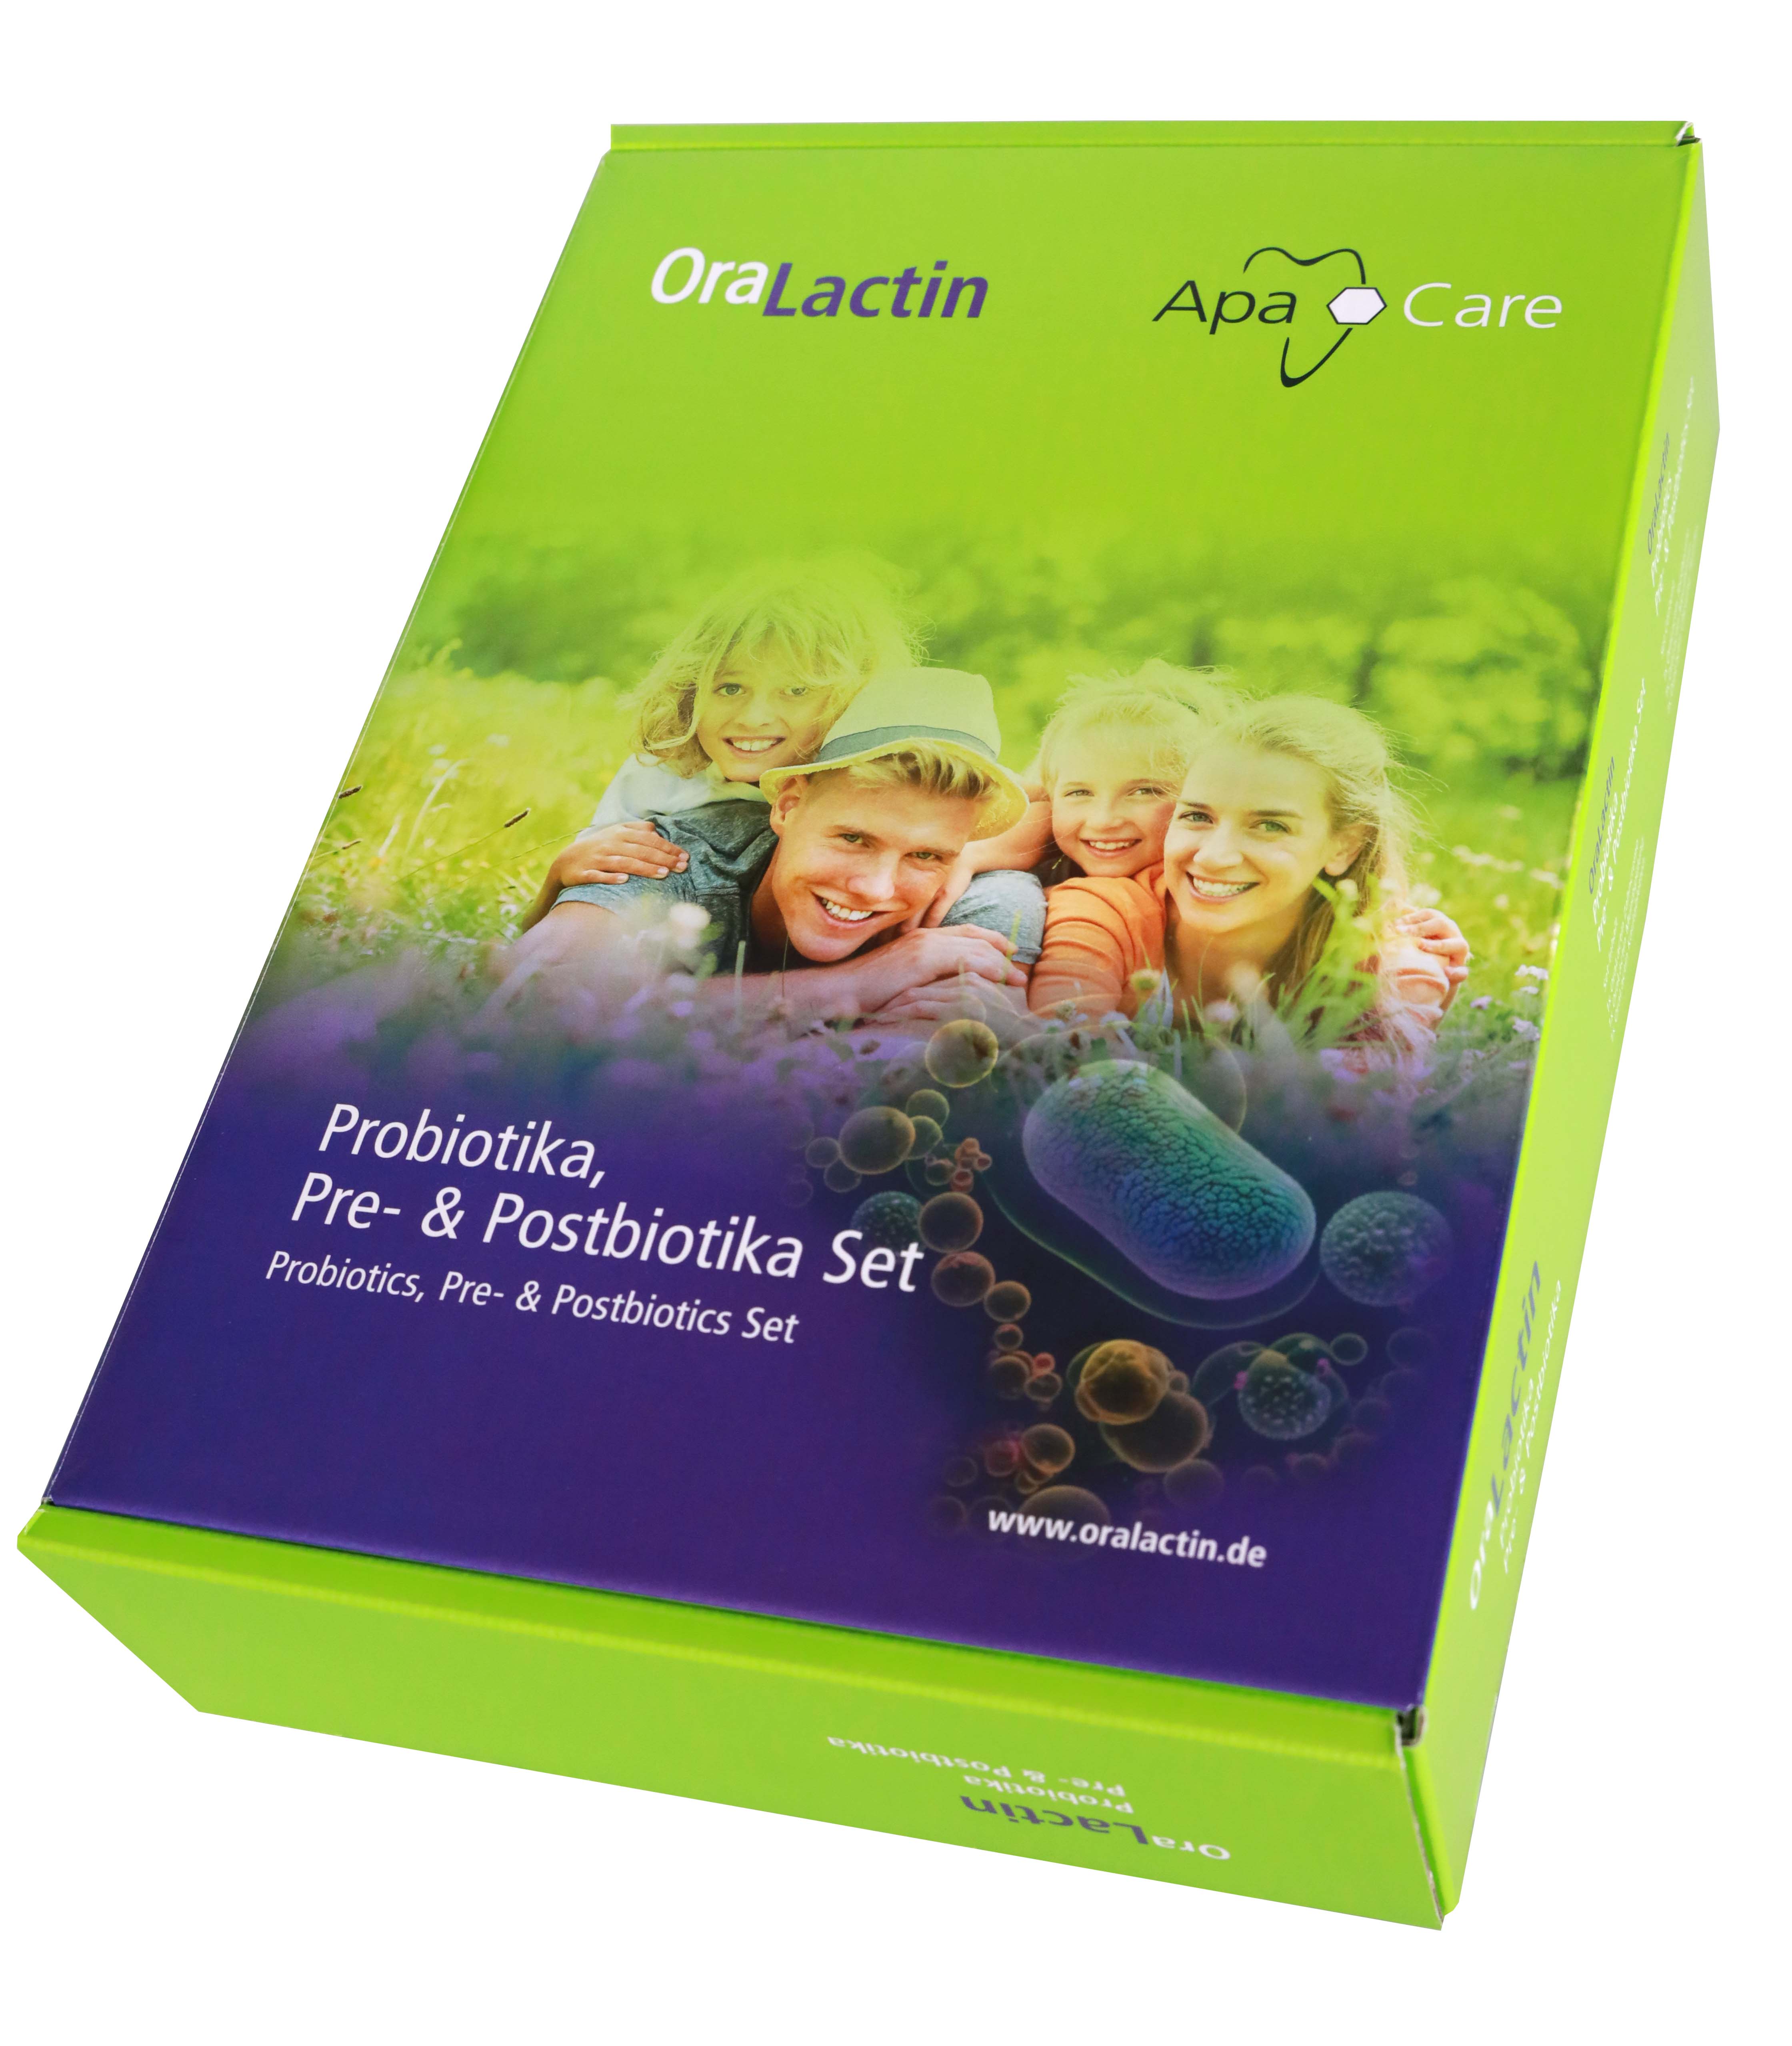  OraLactin Probiotics, pre- and postbiotics set